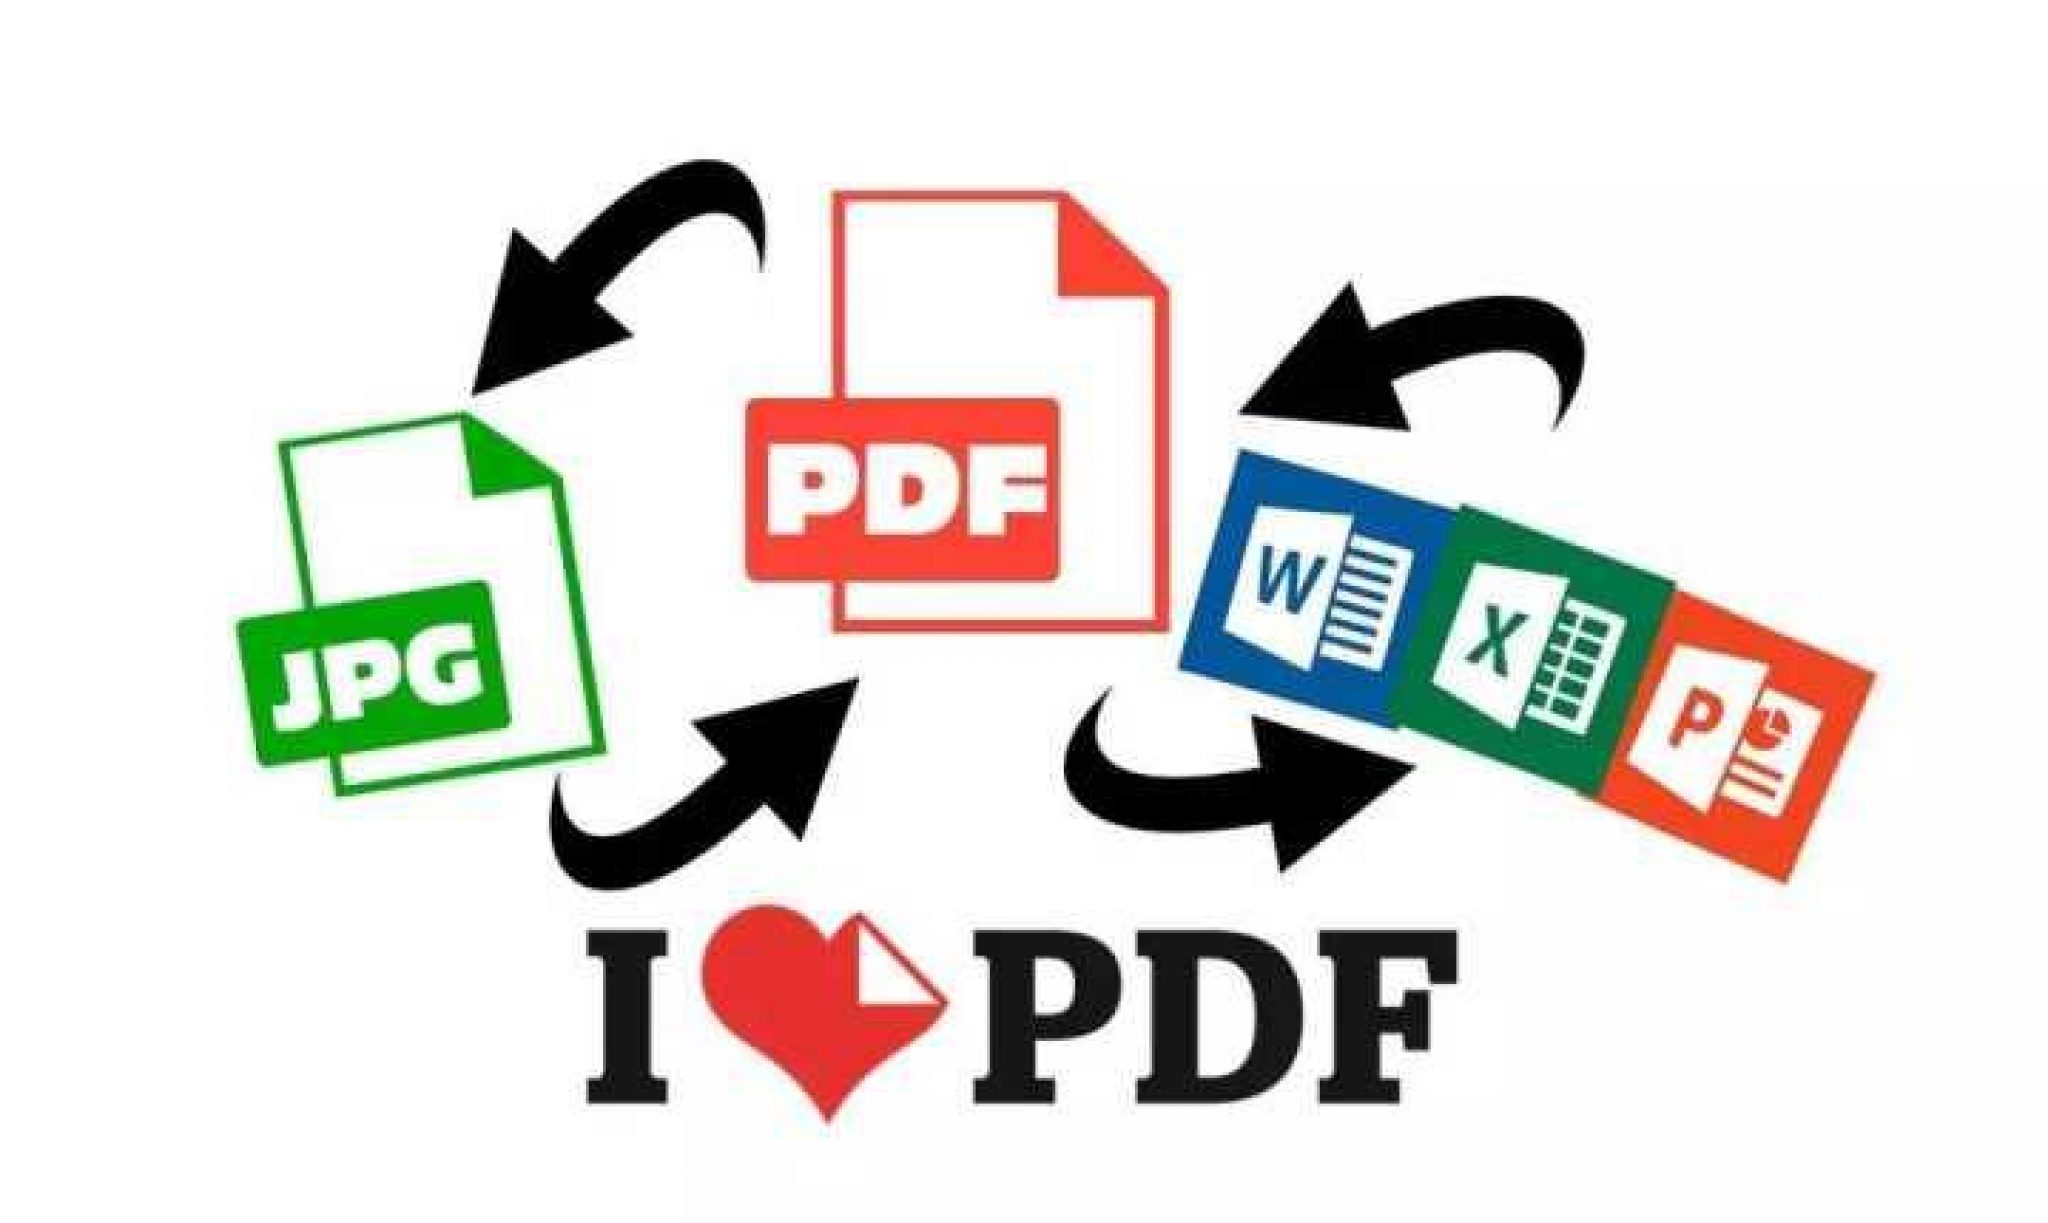 download free pdf to image converter software